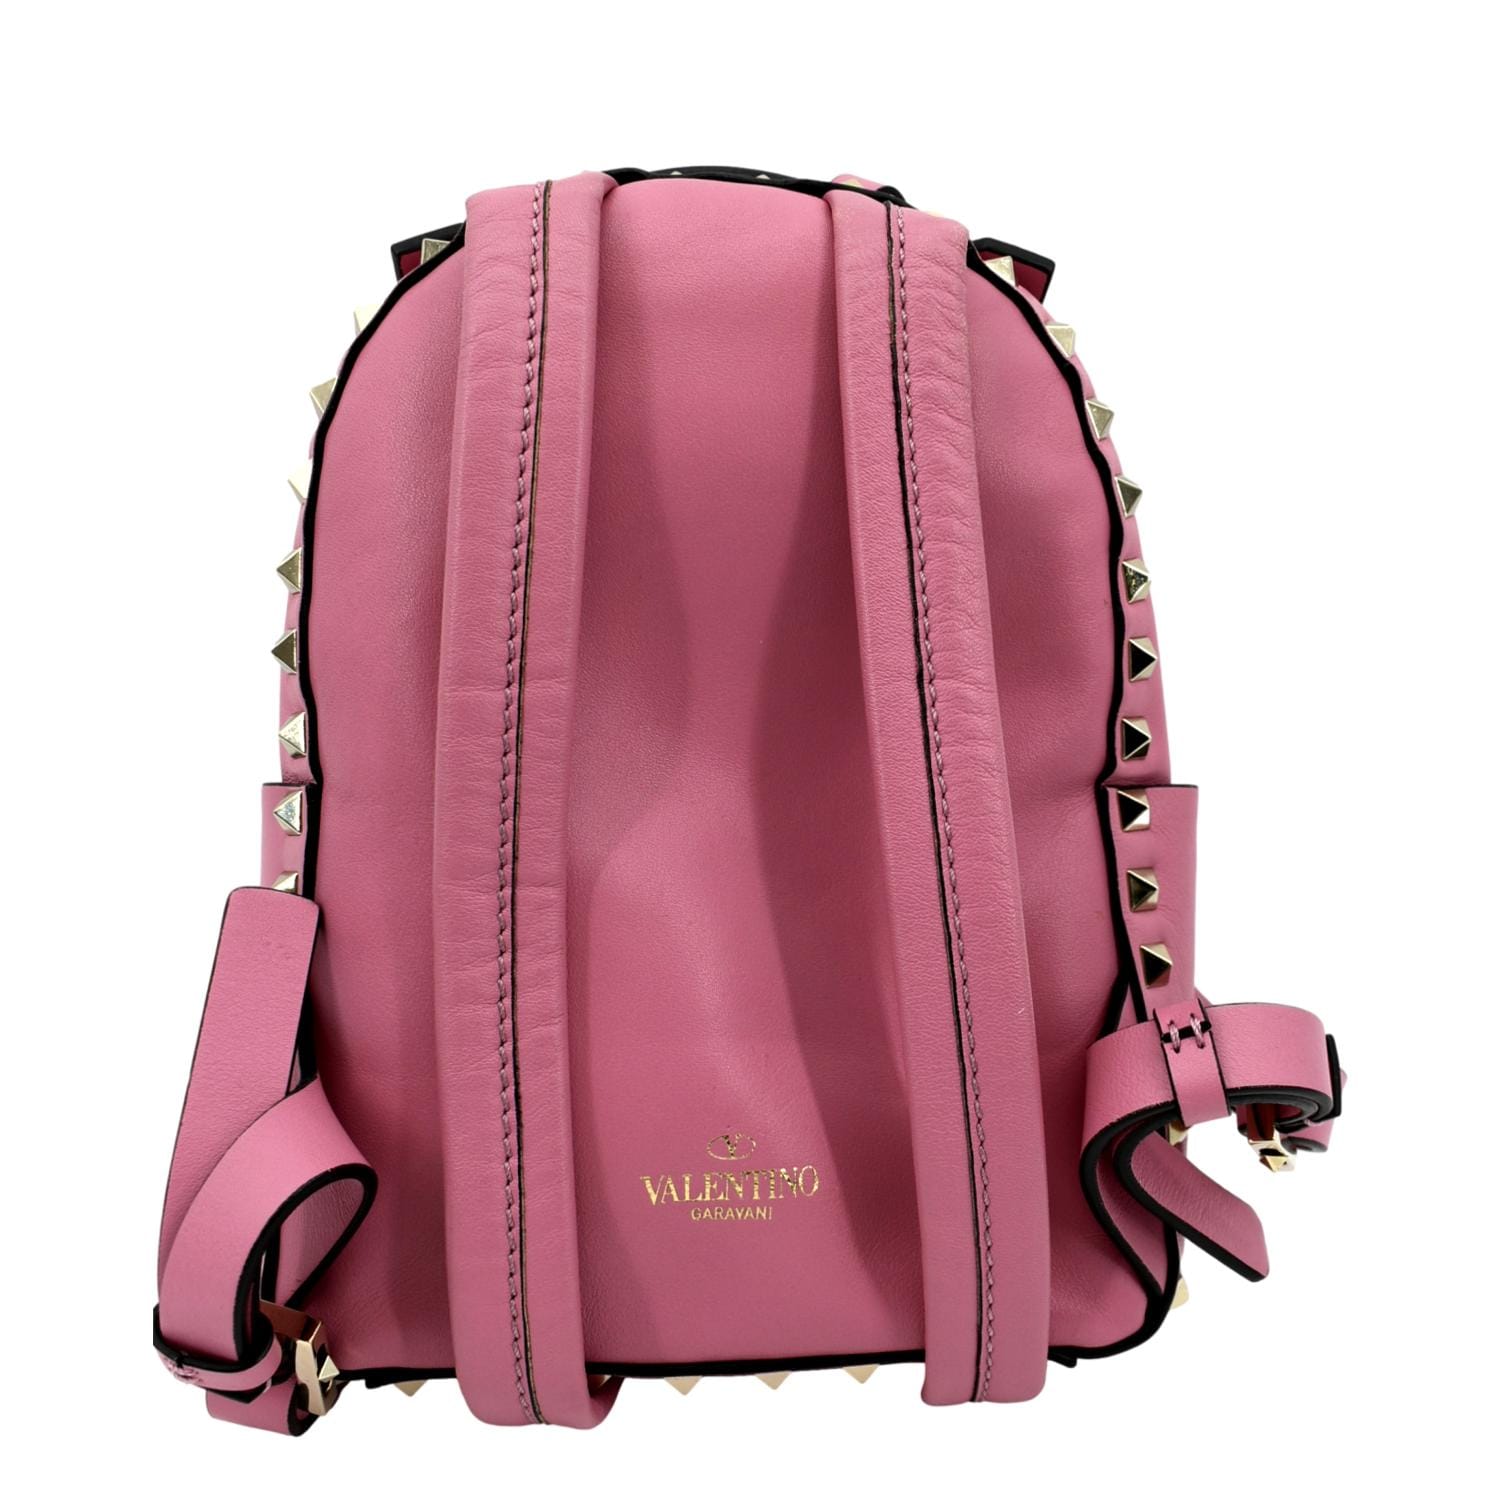 Backpacks Valentino Garavani - Leather backpack with stars